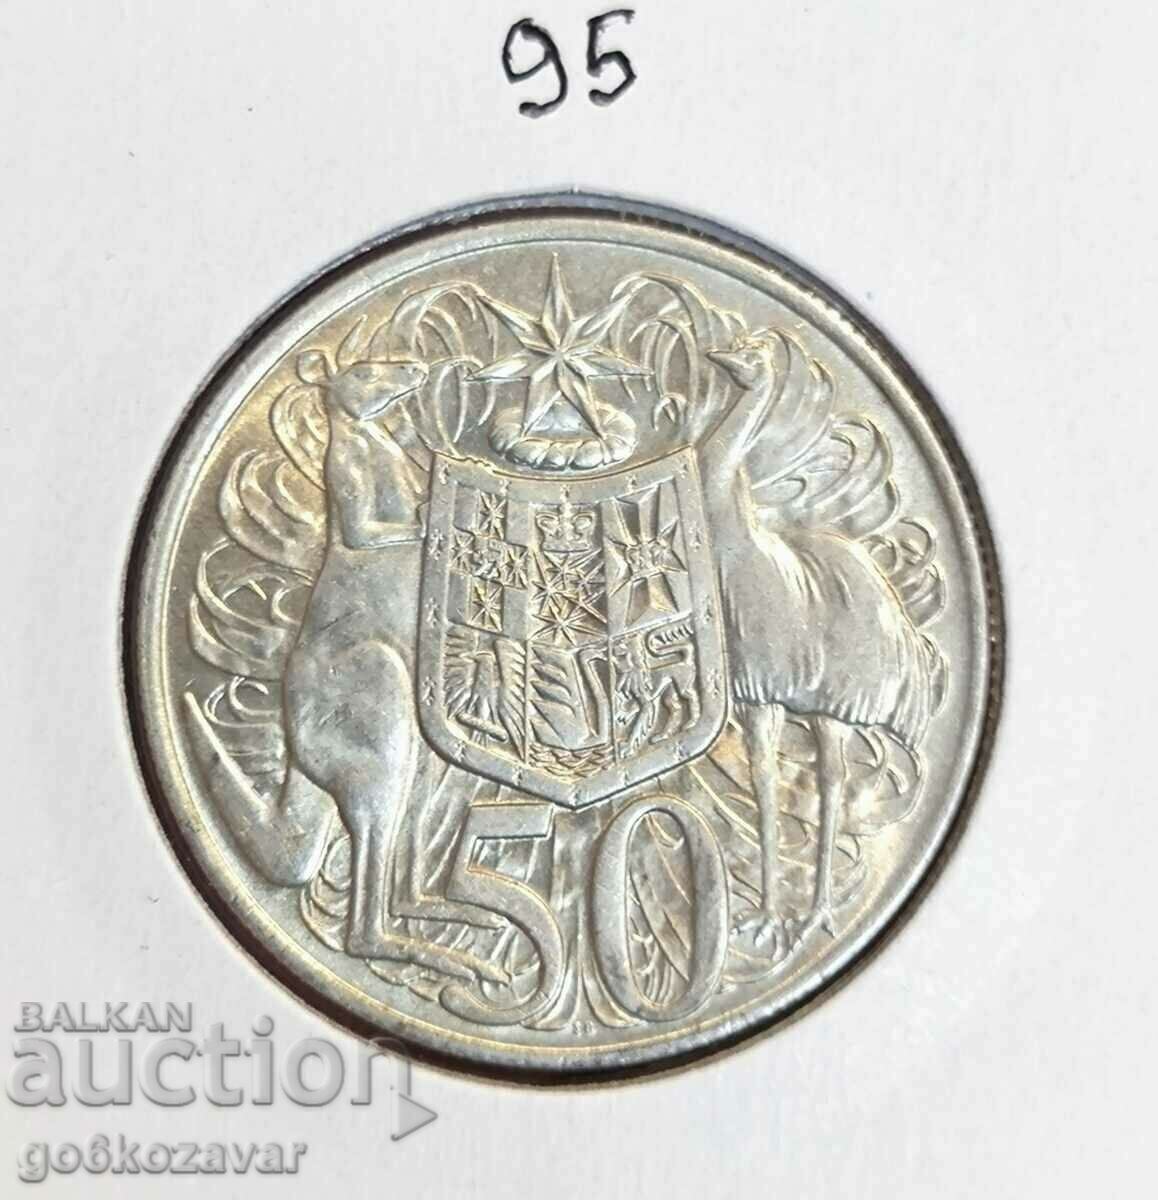 Australia 50 Cents 1966 Silver UNC